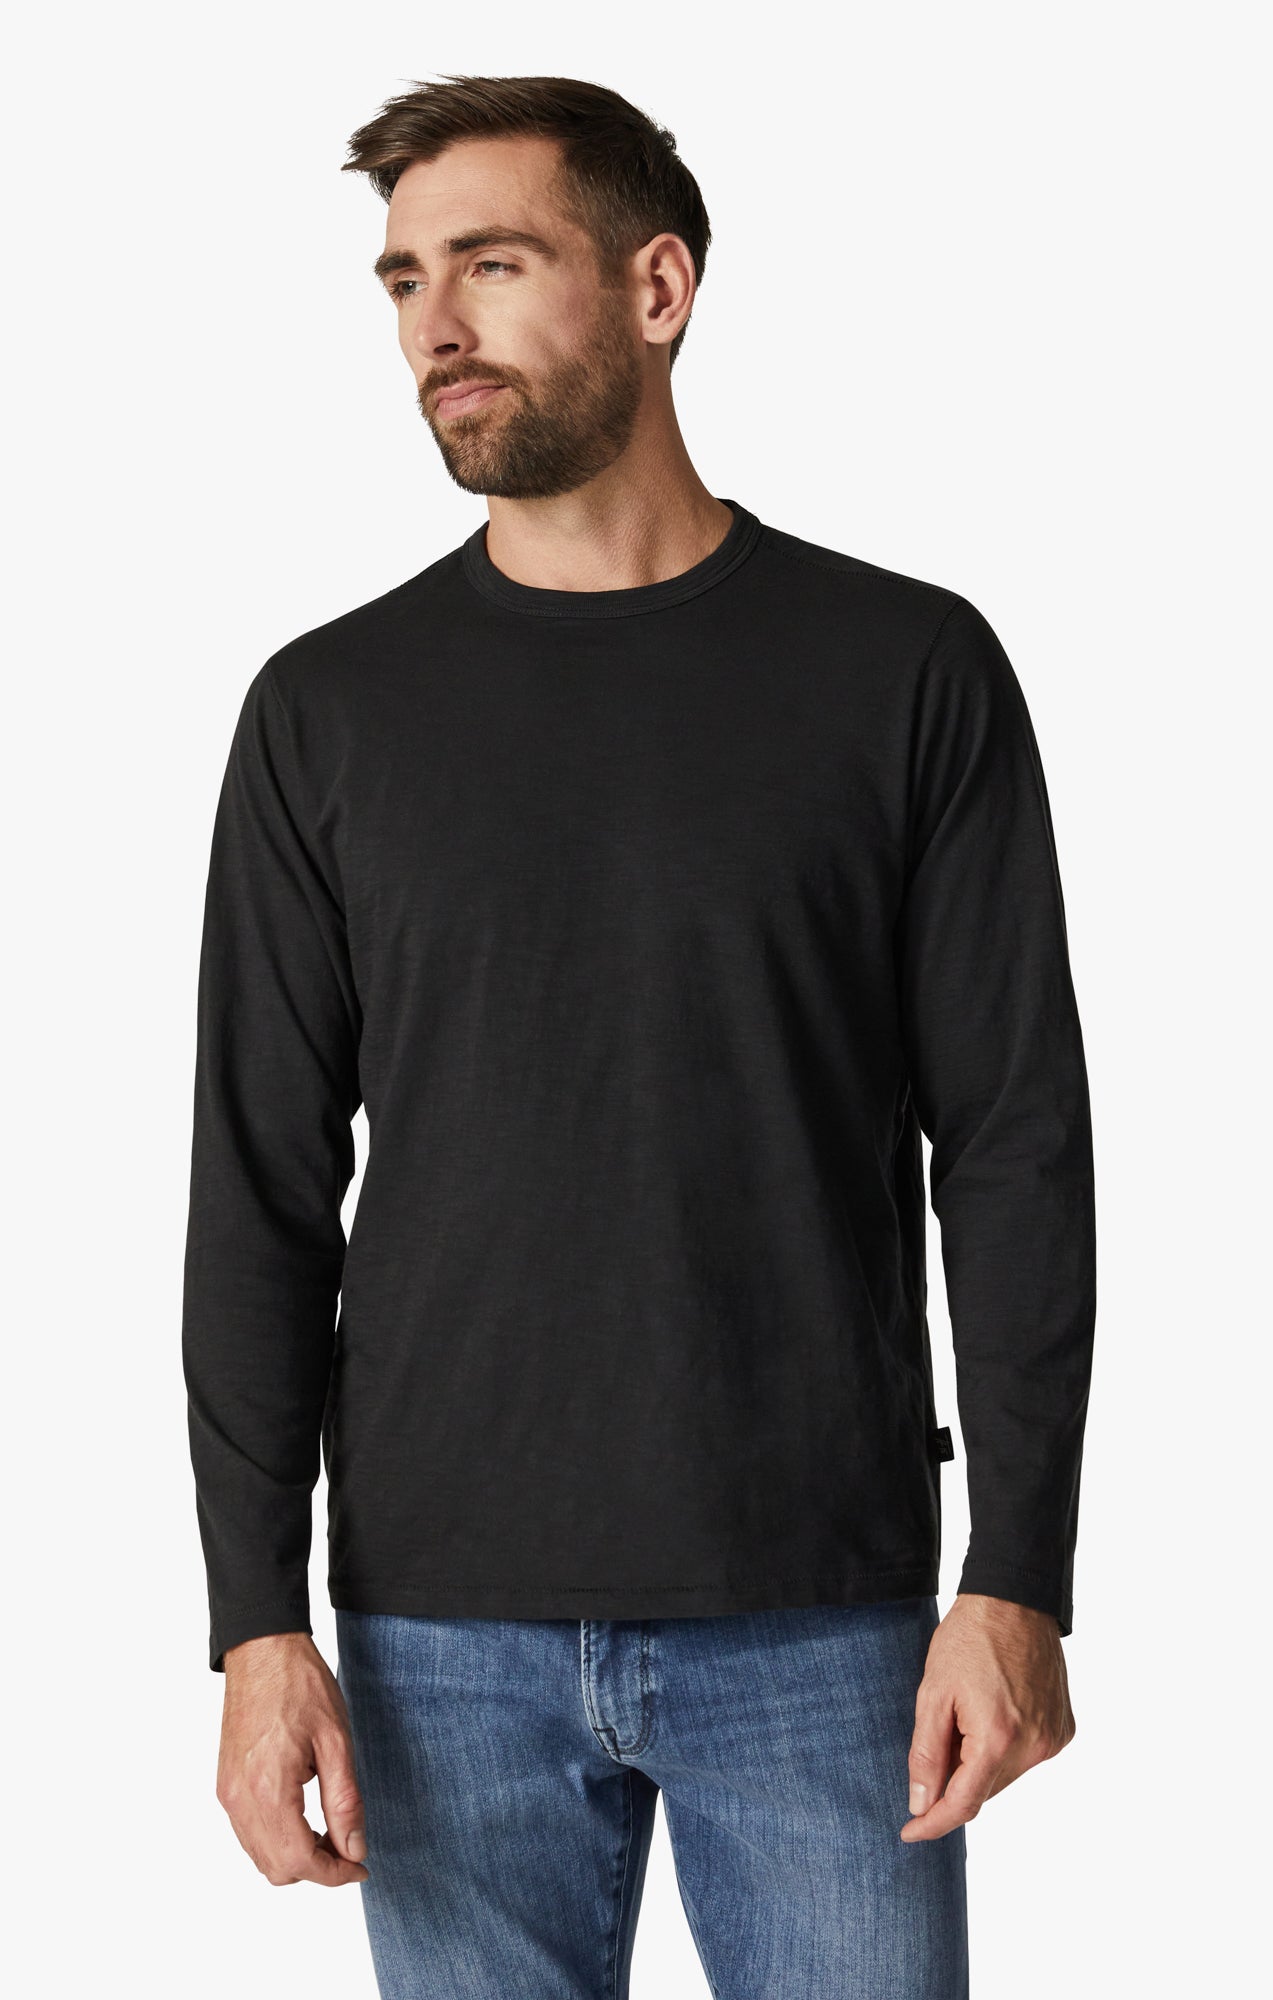 34 Heritage Men's Slub Crew Neck Long Sleeve T-Shirt in Black – 34